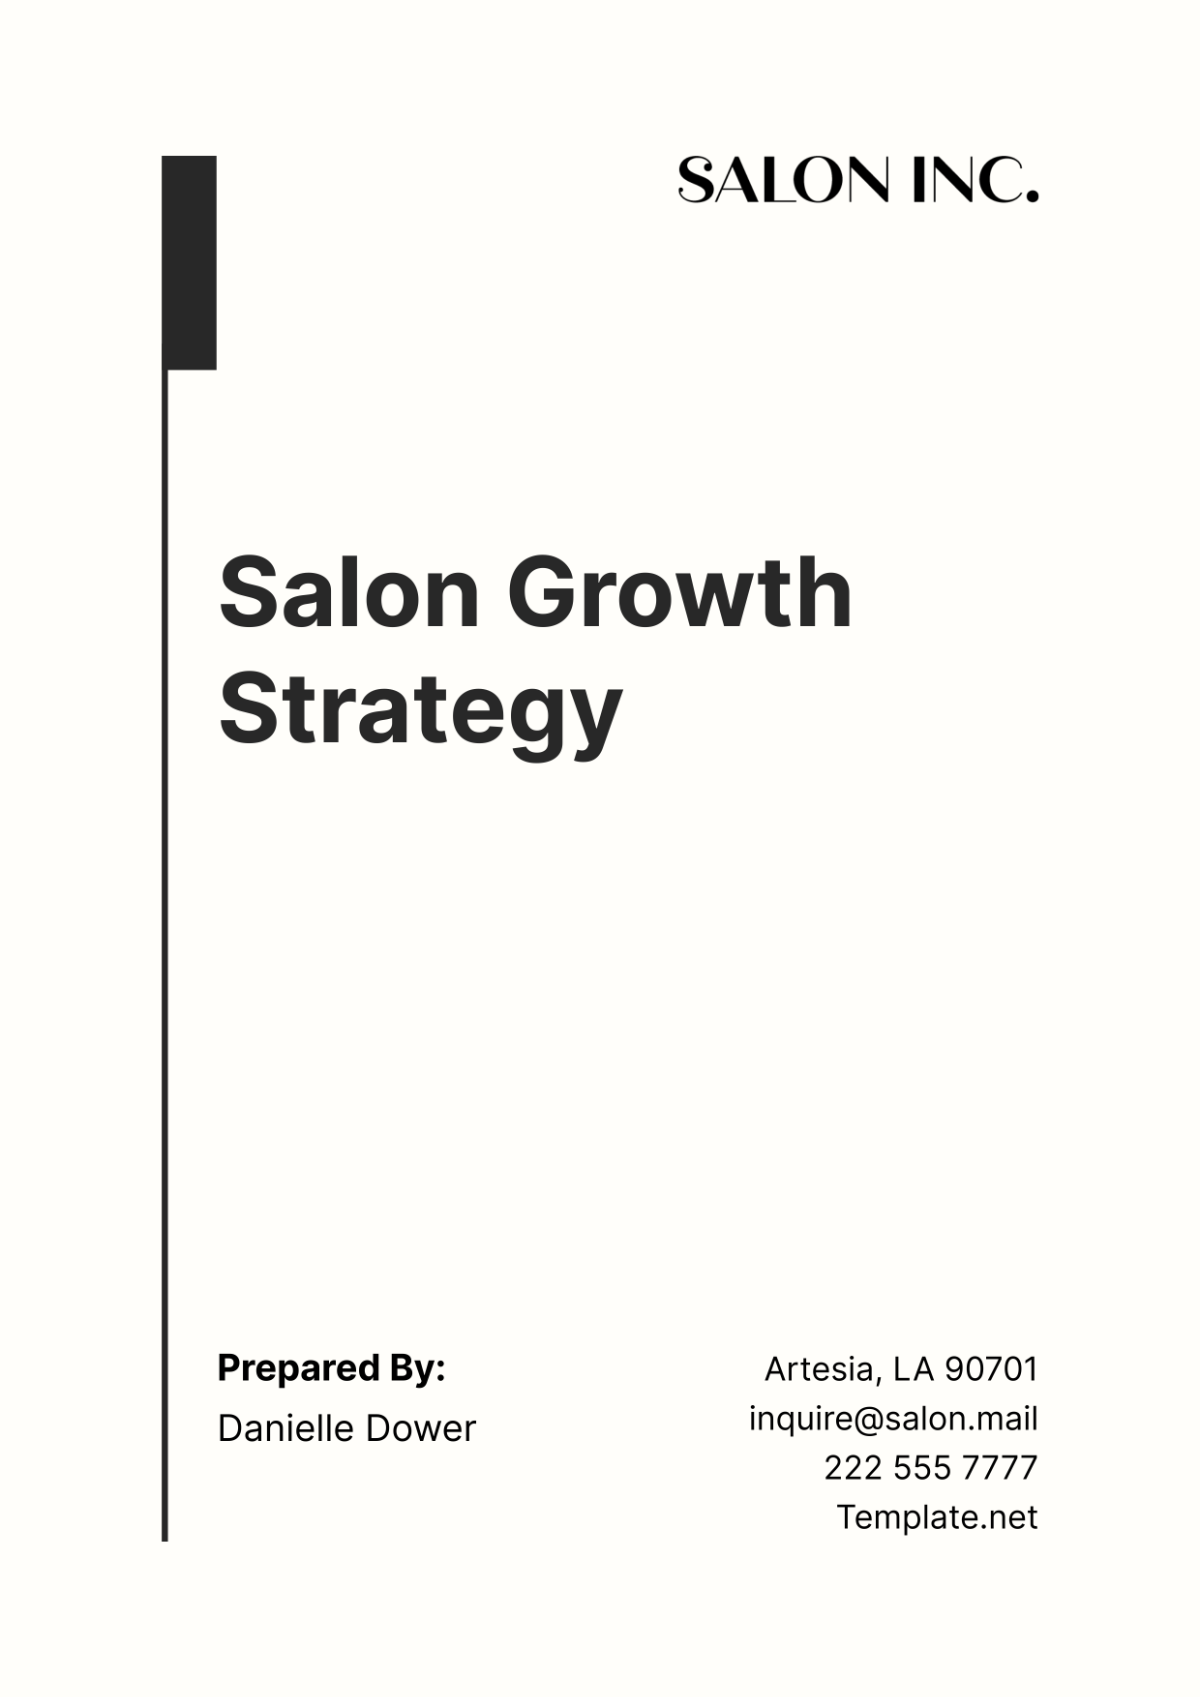 Salon Growth Strategy Template